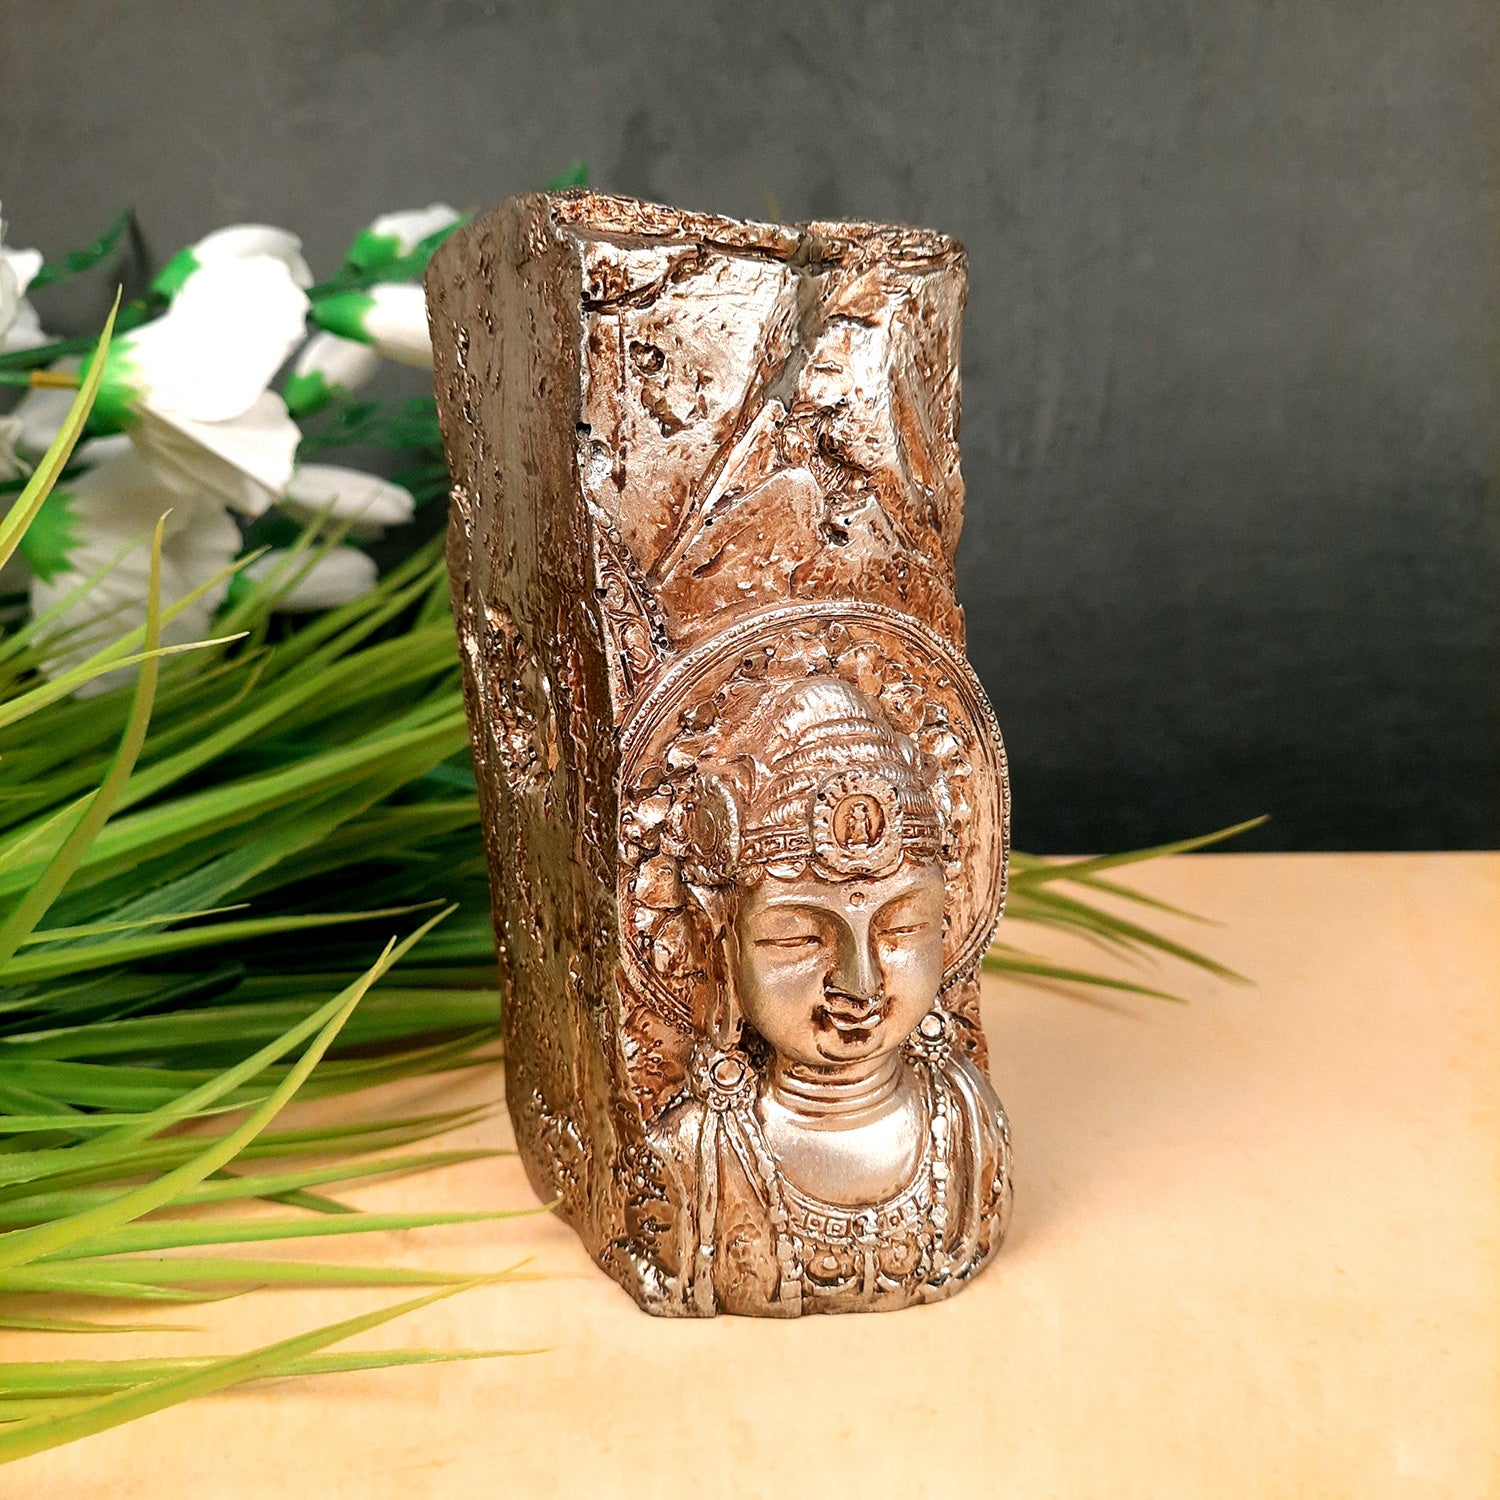 Tea Light Holder - Buddha Design | T Light Candle Stand - For For Home Decor, Living room, Table & Shelf Decor, Office, Decorative Item for Festivals & Gifts - 6 Inch - Apkamart